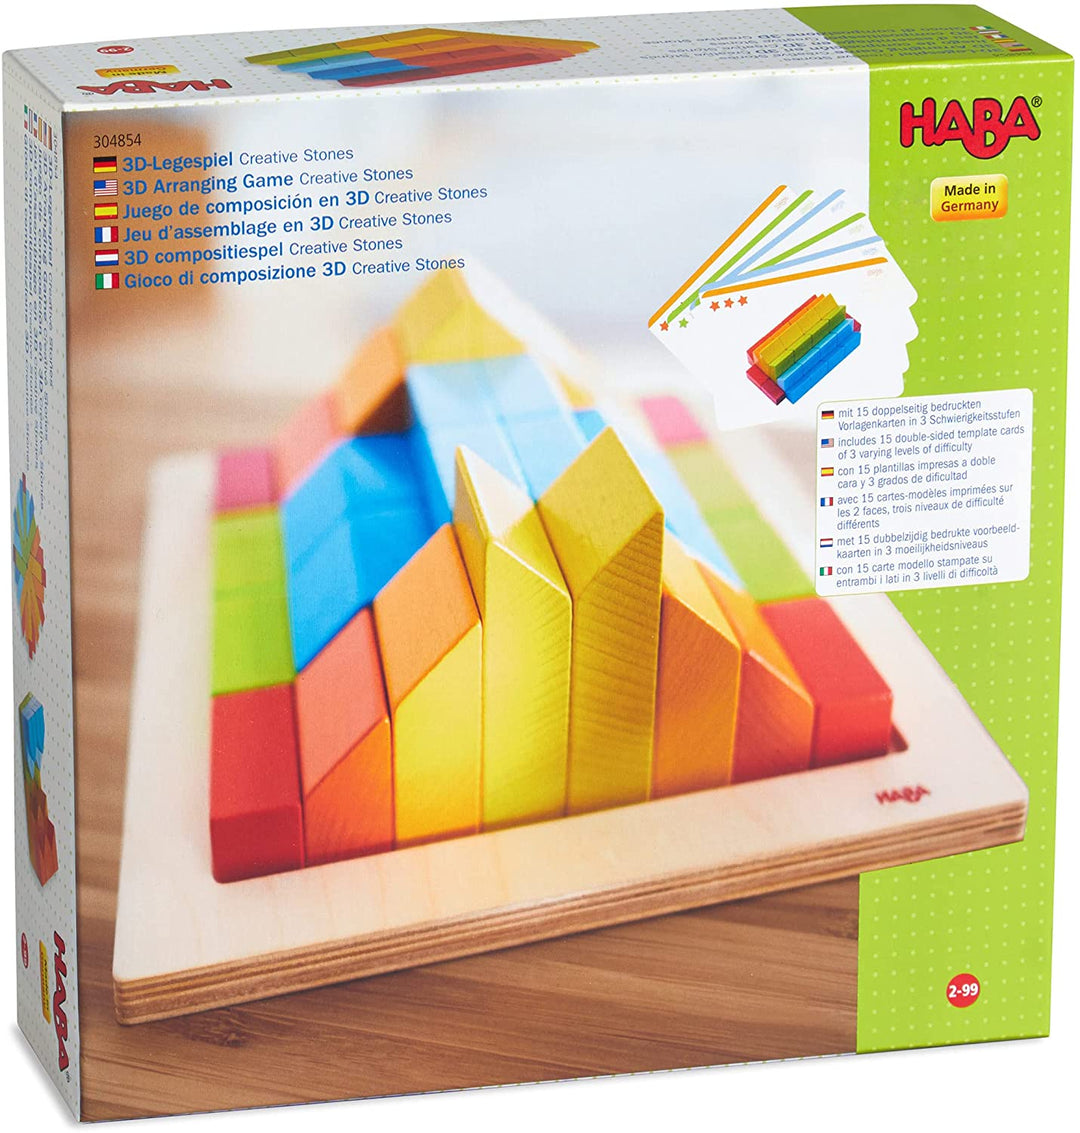 HABA 304854 - 3D Arranging Game Creative Stones